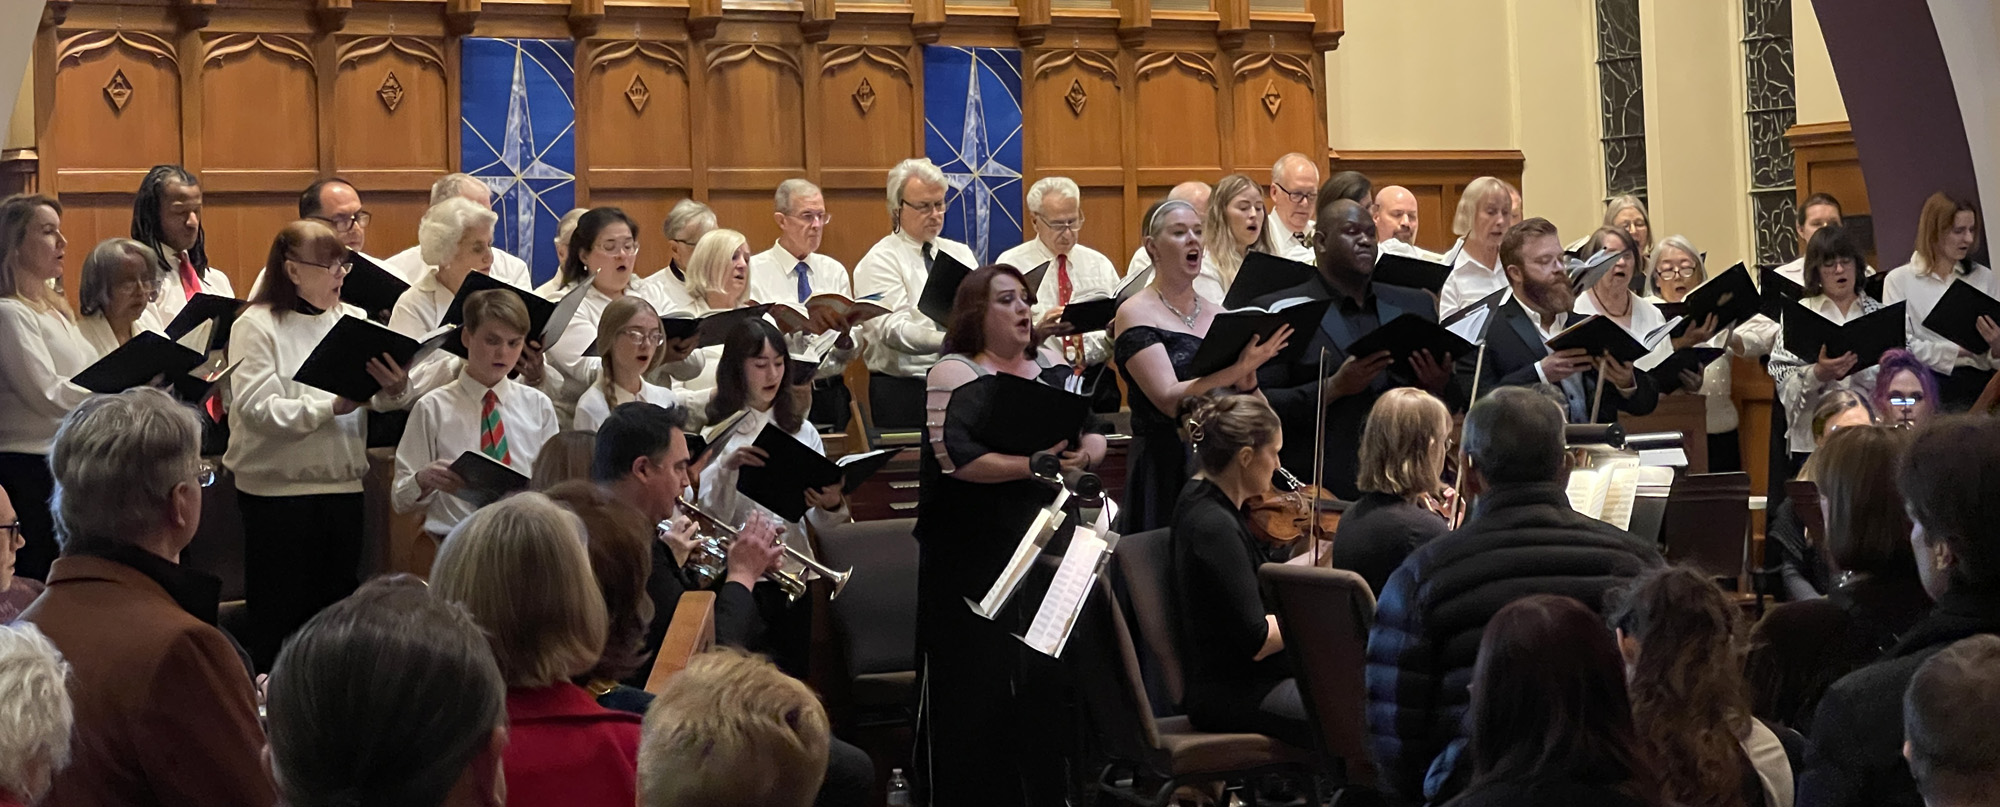 Handel's Messiah at Riverside Presbyterian Church in Riverside IL